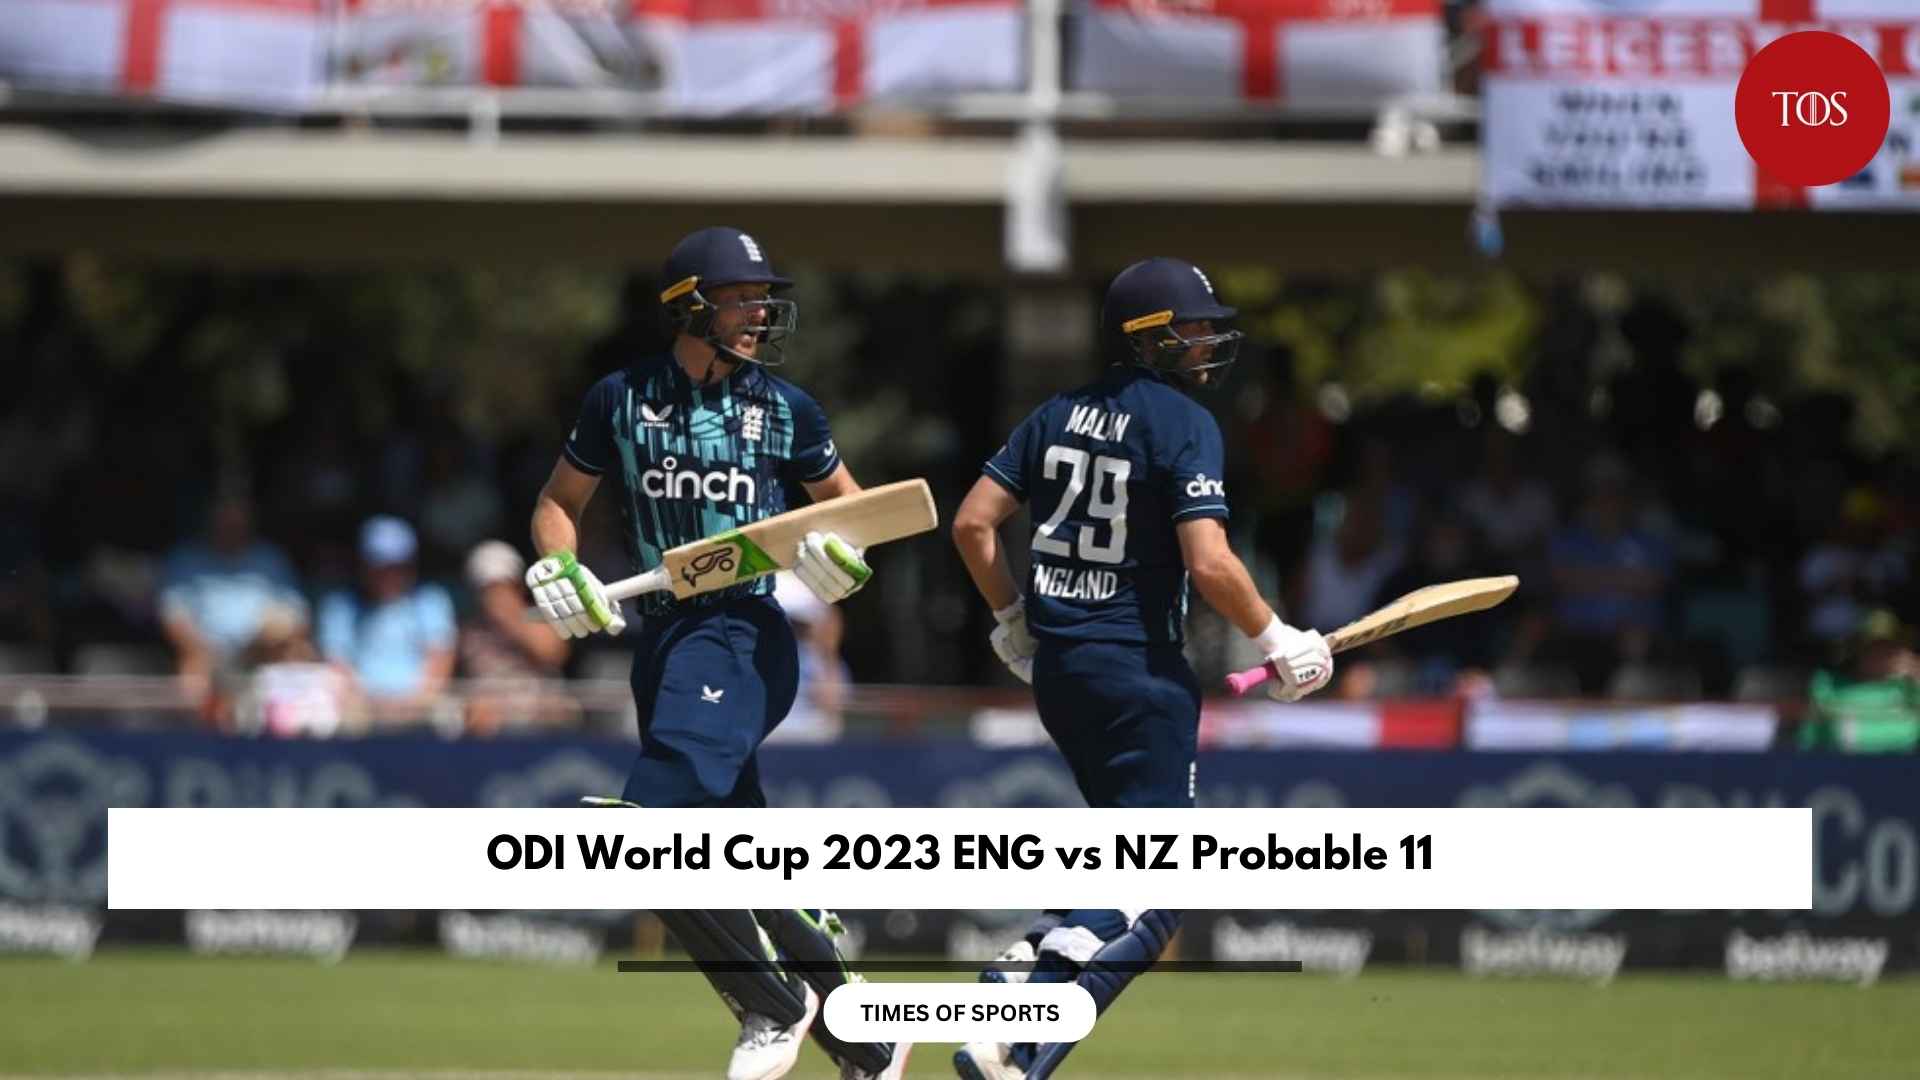 ODI World Cup 2023 ENG vs NZ Probable 11